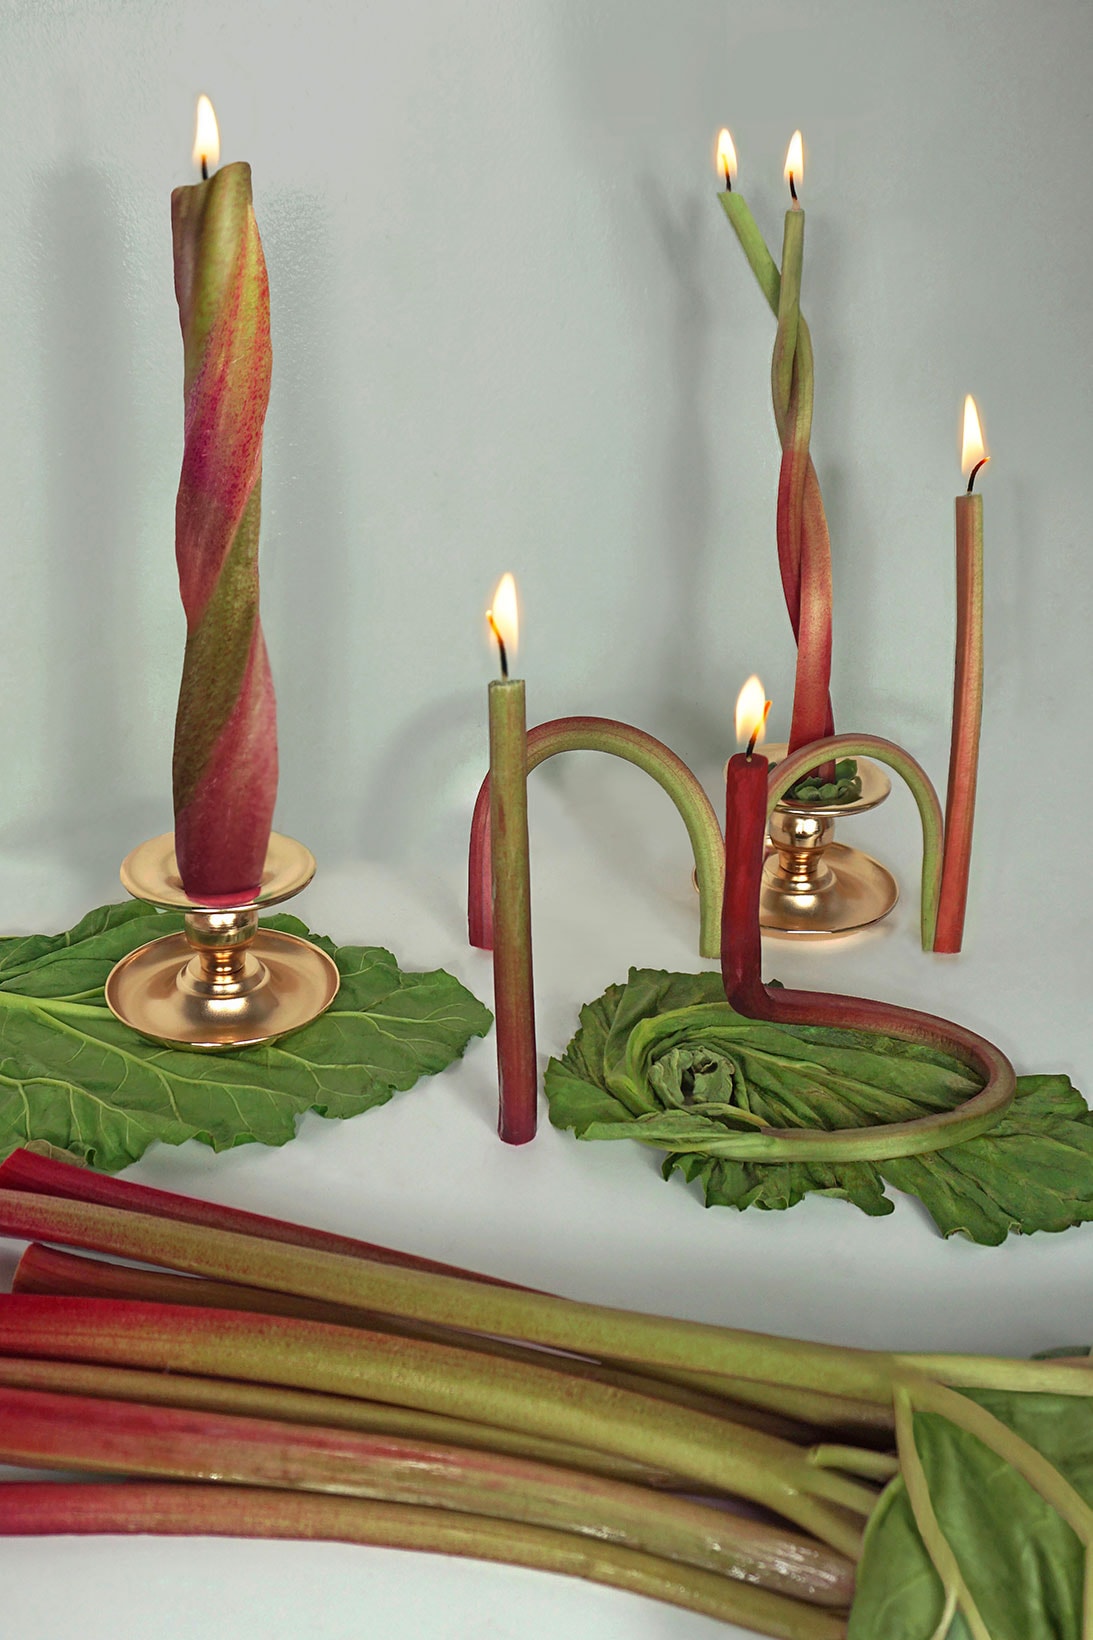 GELCARE FW21 Nail Polish Manicure Rhubarb Candles Gab Bois